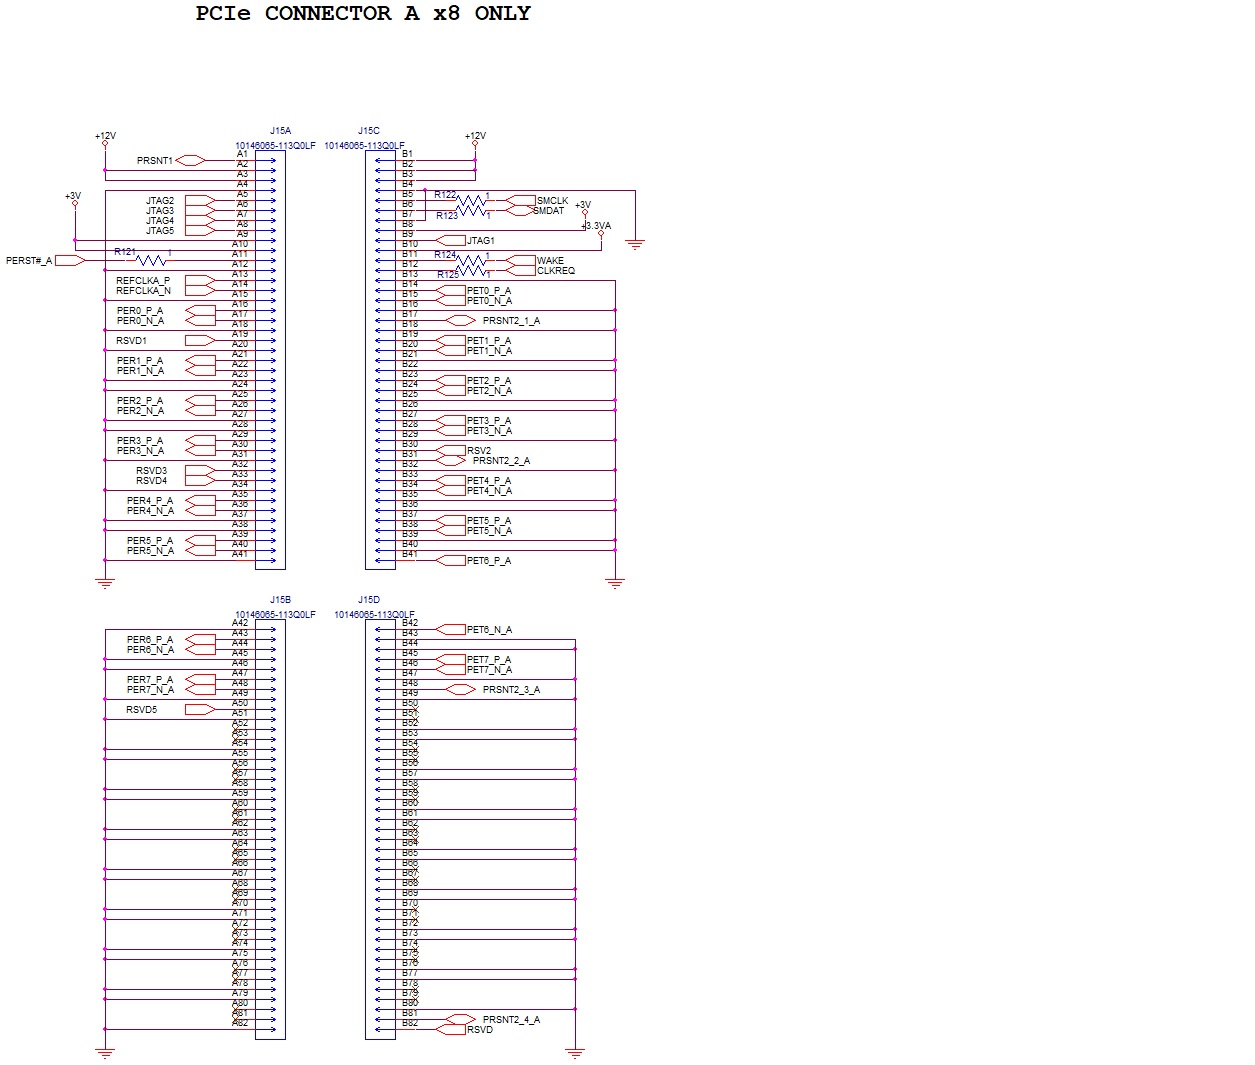 GUID-20201109-CA0I-XTDH-RQ80-B9MZFNL4N8XK-low.jpg